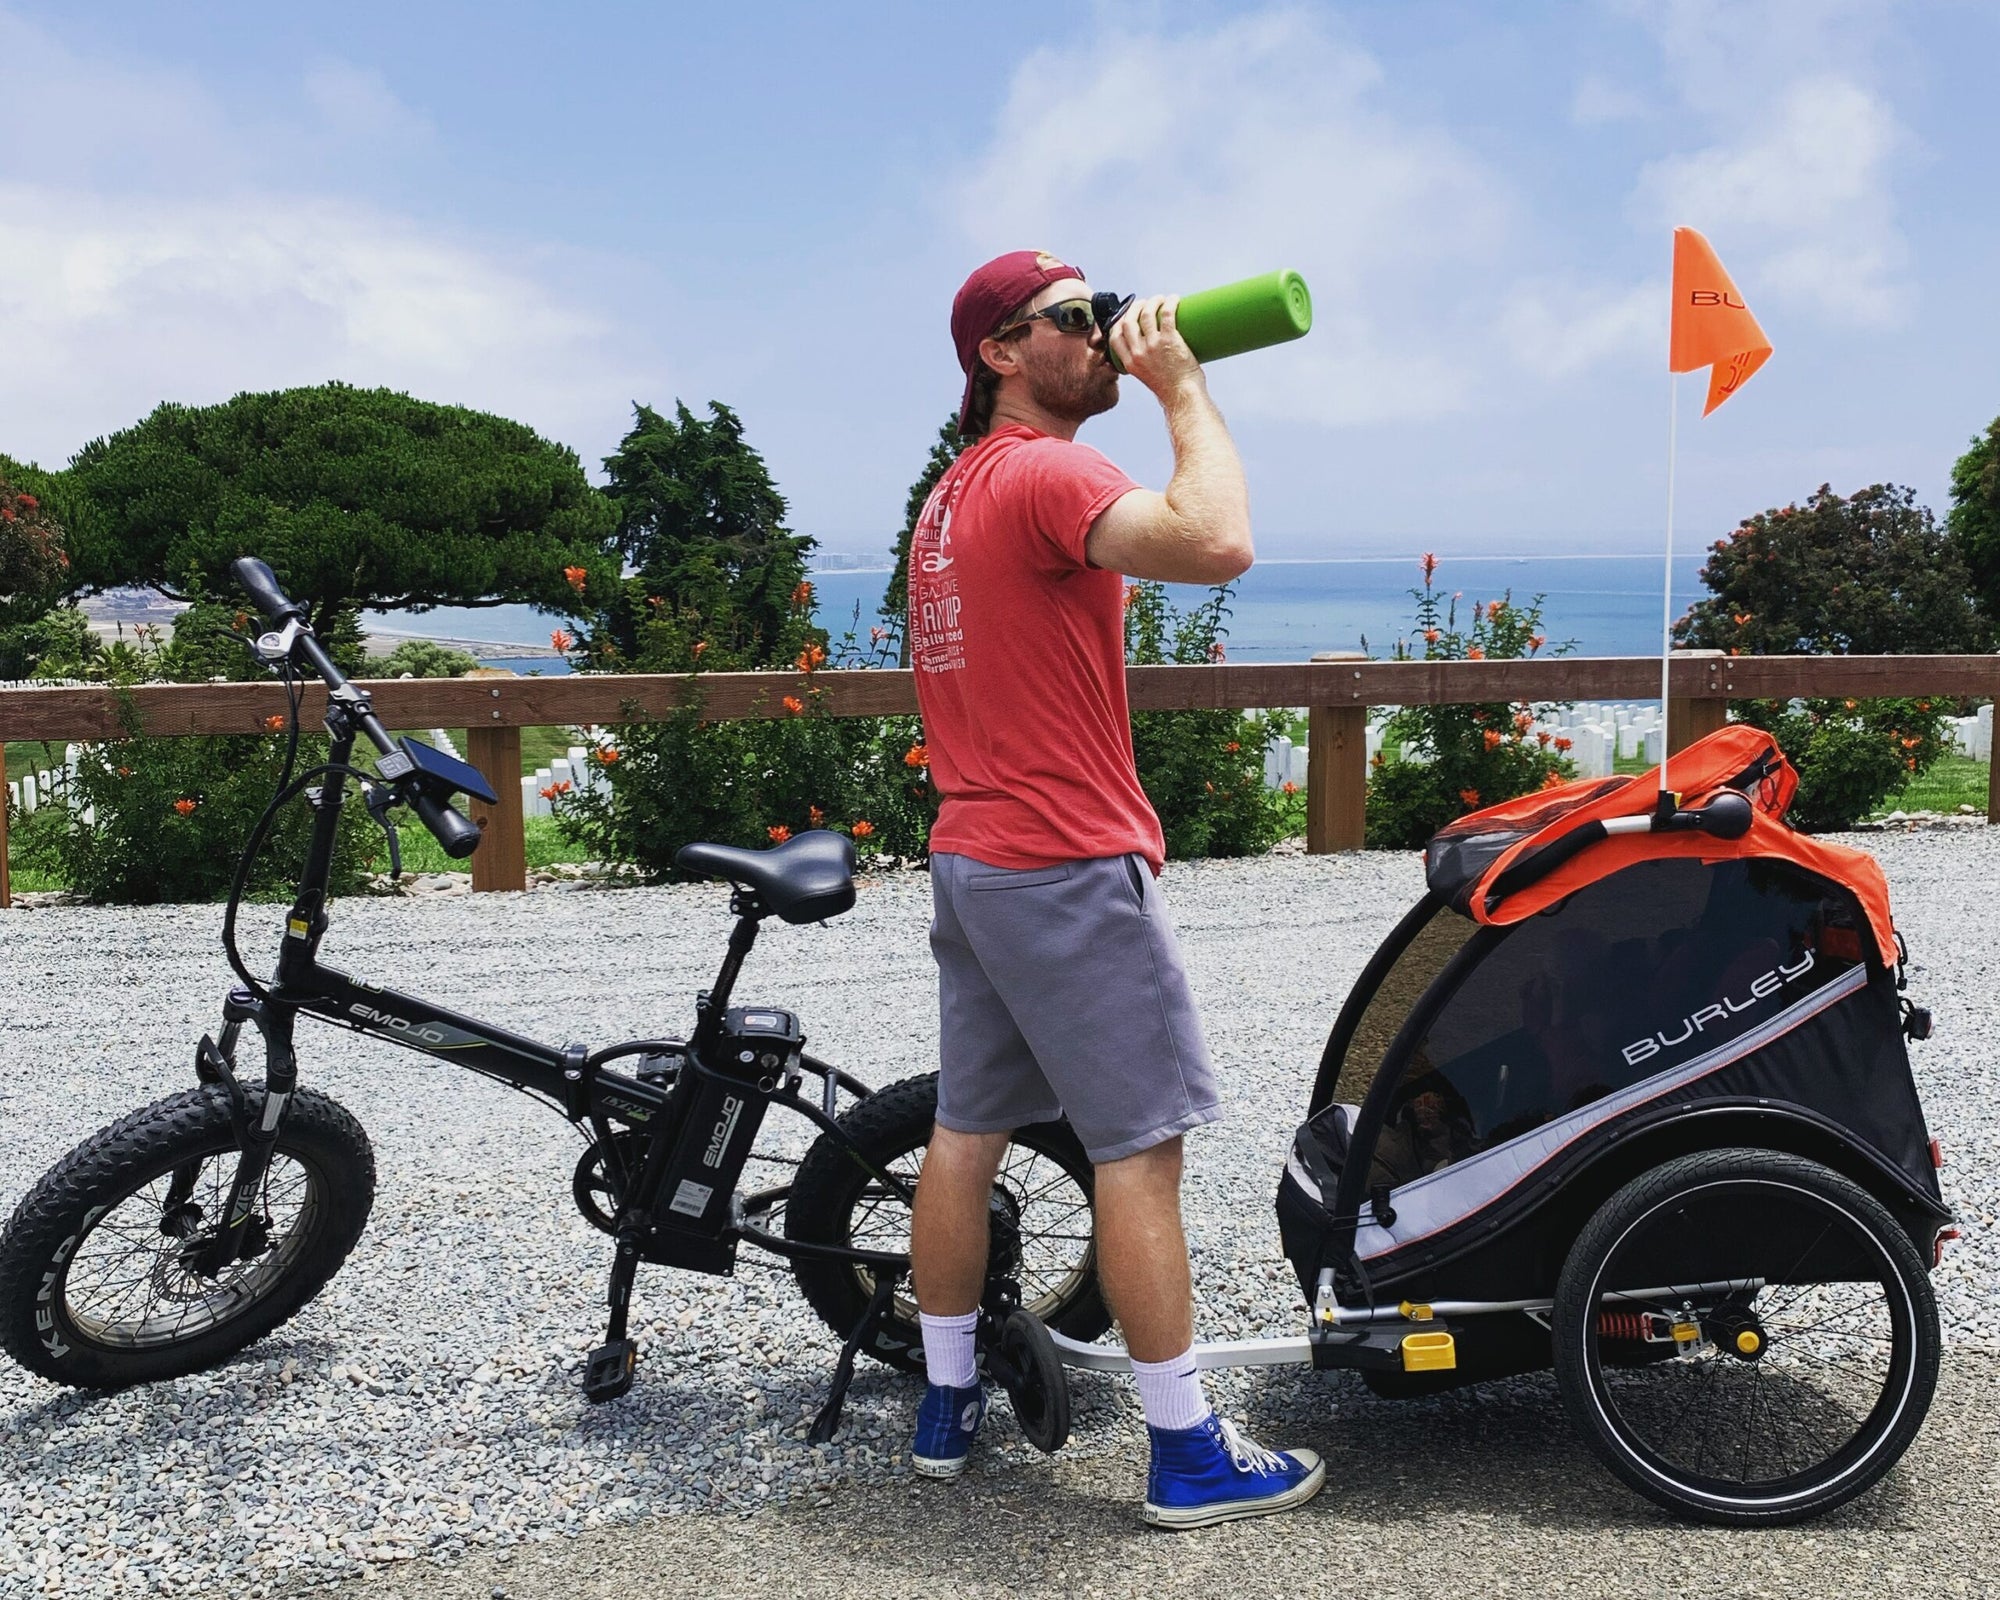 man drinks from water bottle in front of bike with kids bike trailer on teh back. ocean in background